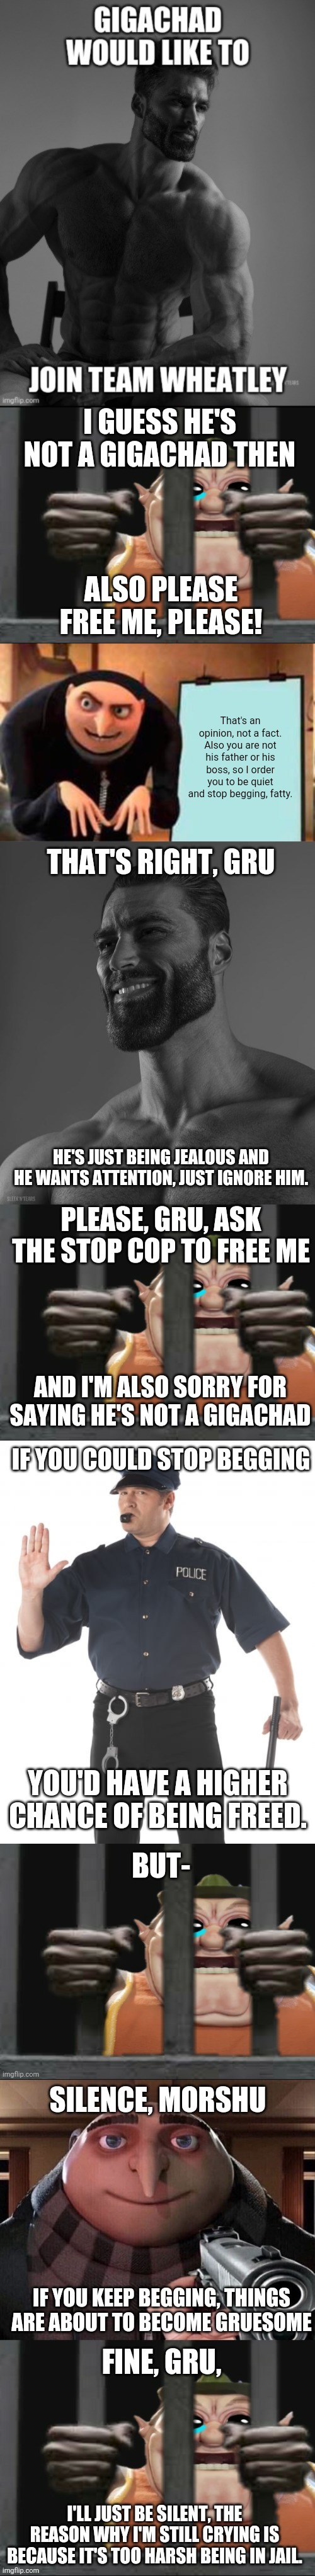 Your opinion doesn't change the fact that he's a Gigachad, Wigglytuff_fan. | image tagged in morshu jail,gru's plan,gigachad,gru gun | made w/ Imgflip meme maker